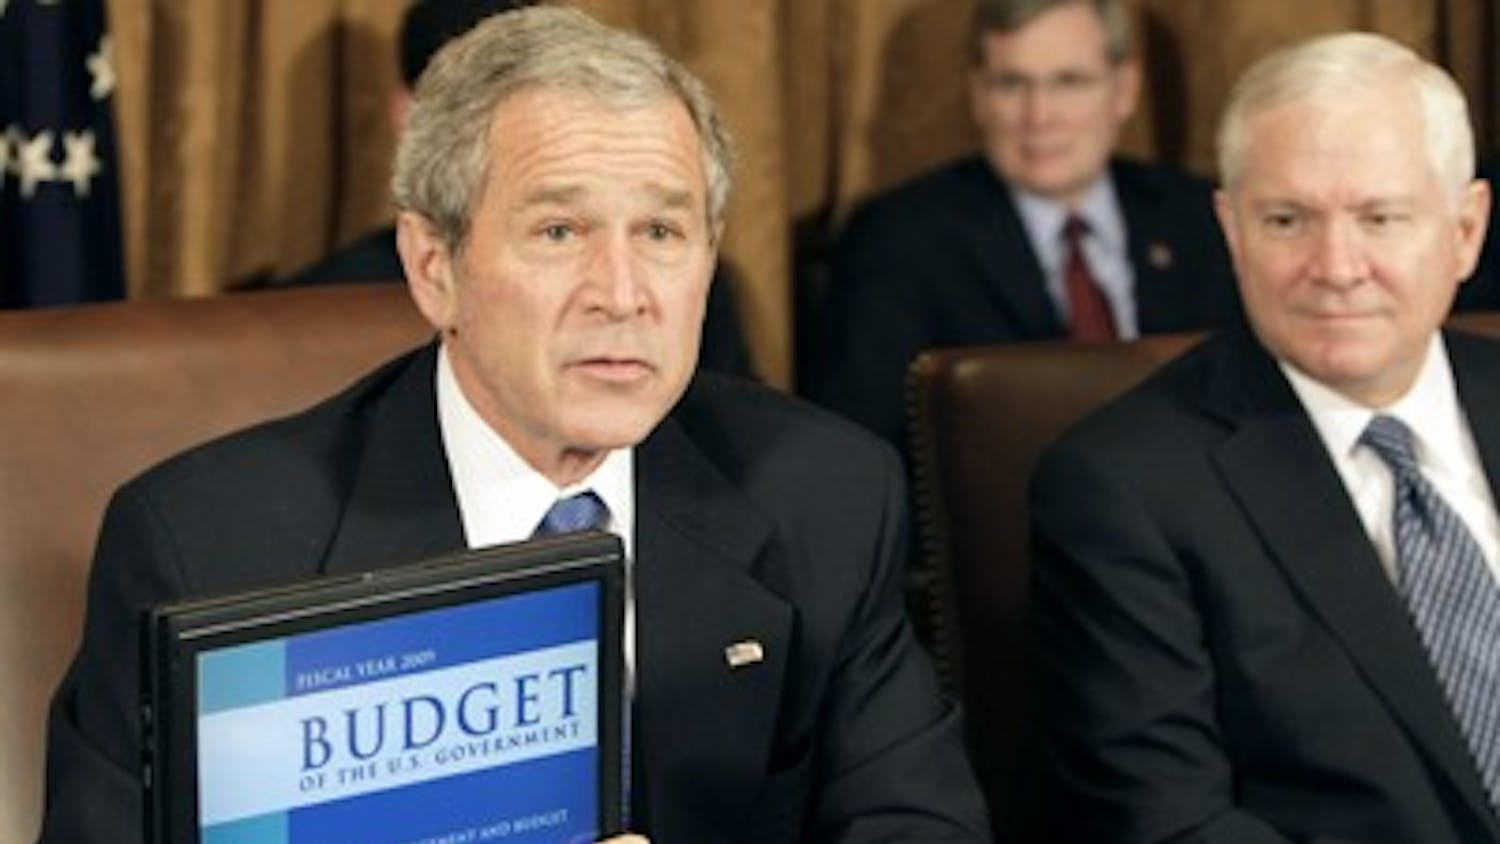 Bush Budget